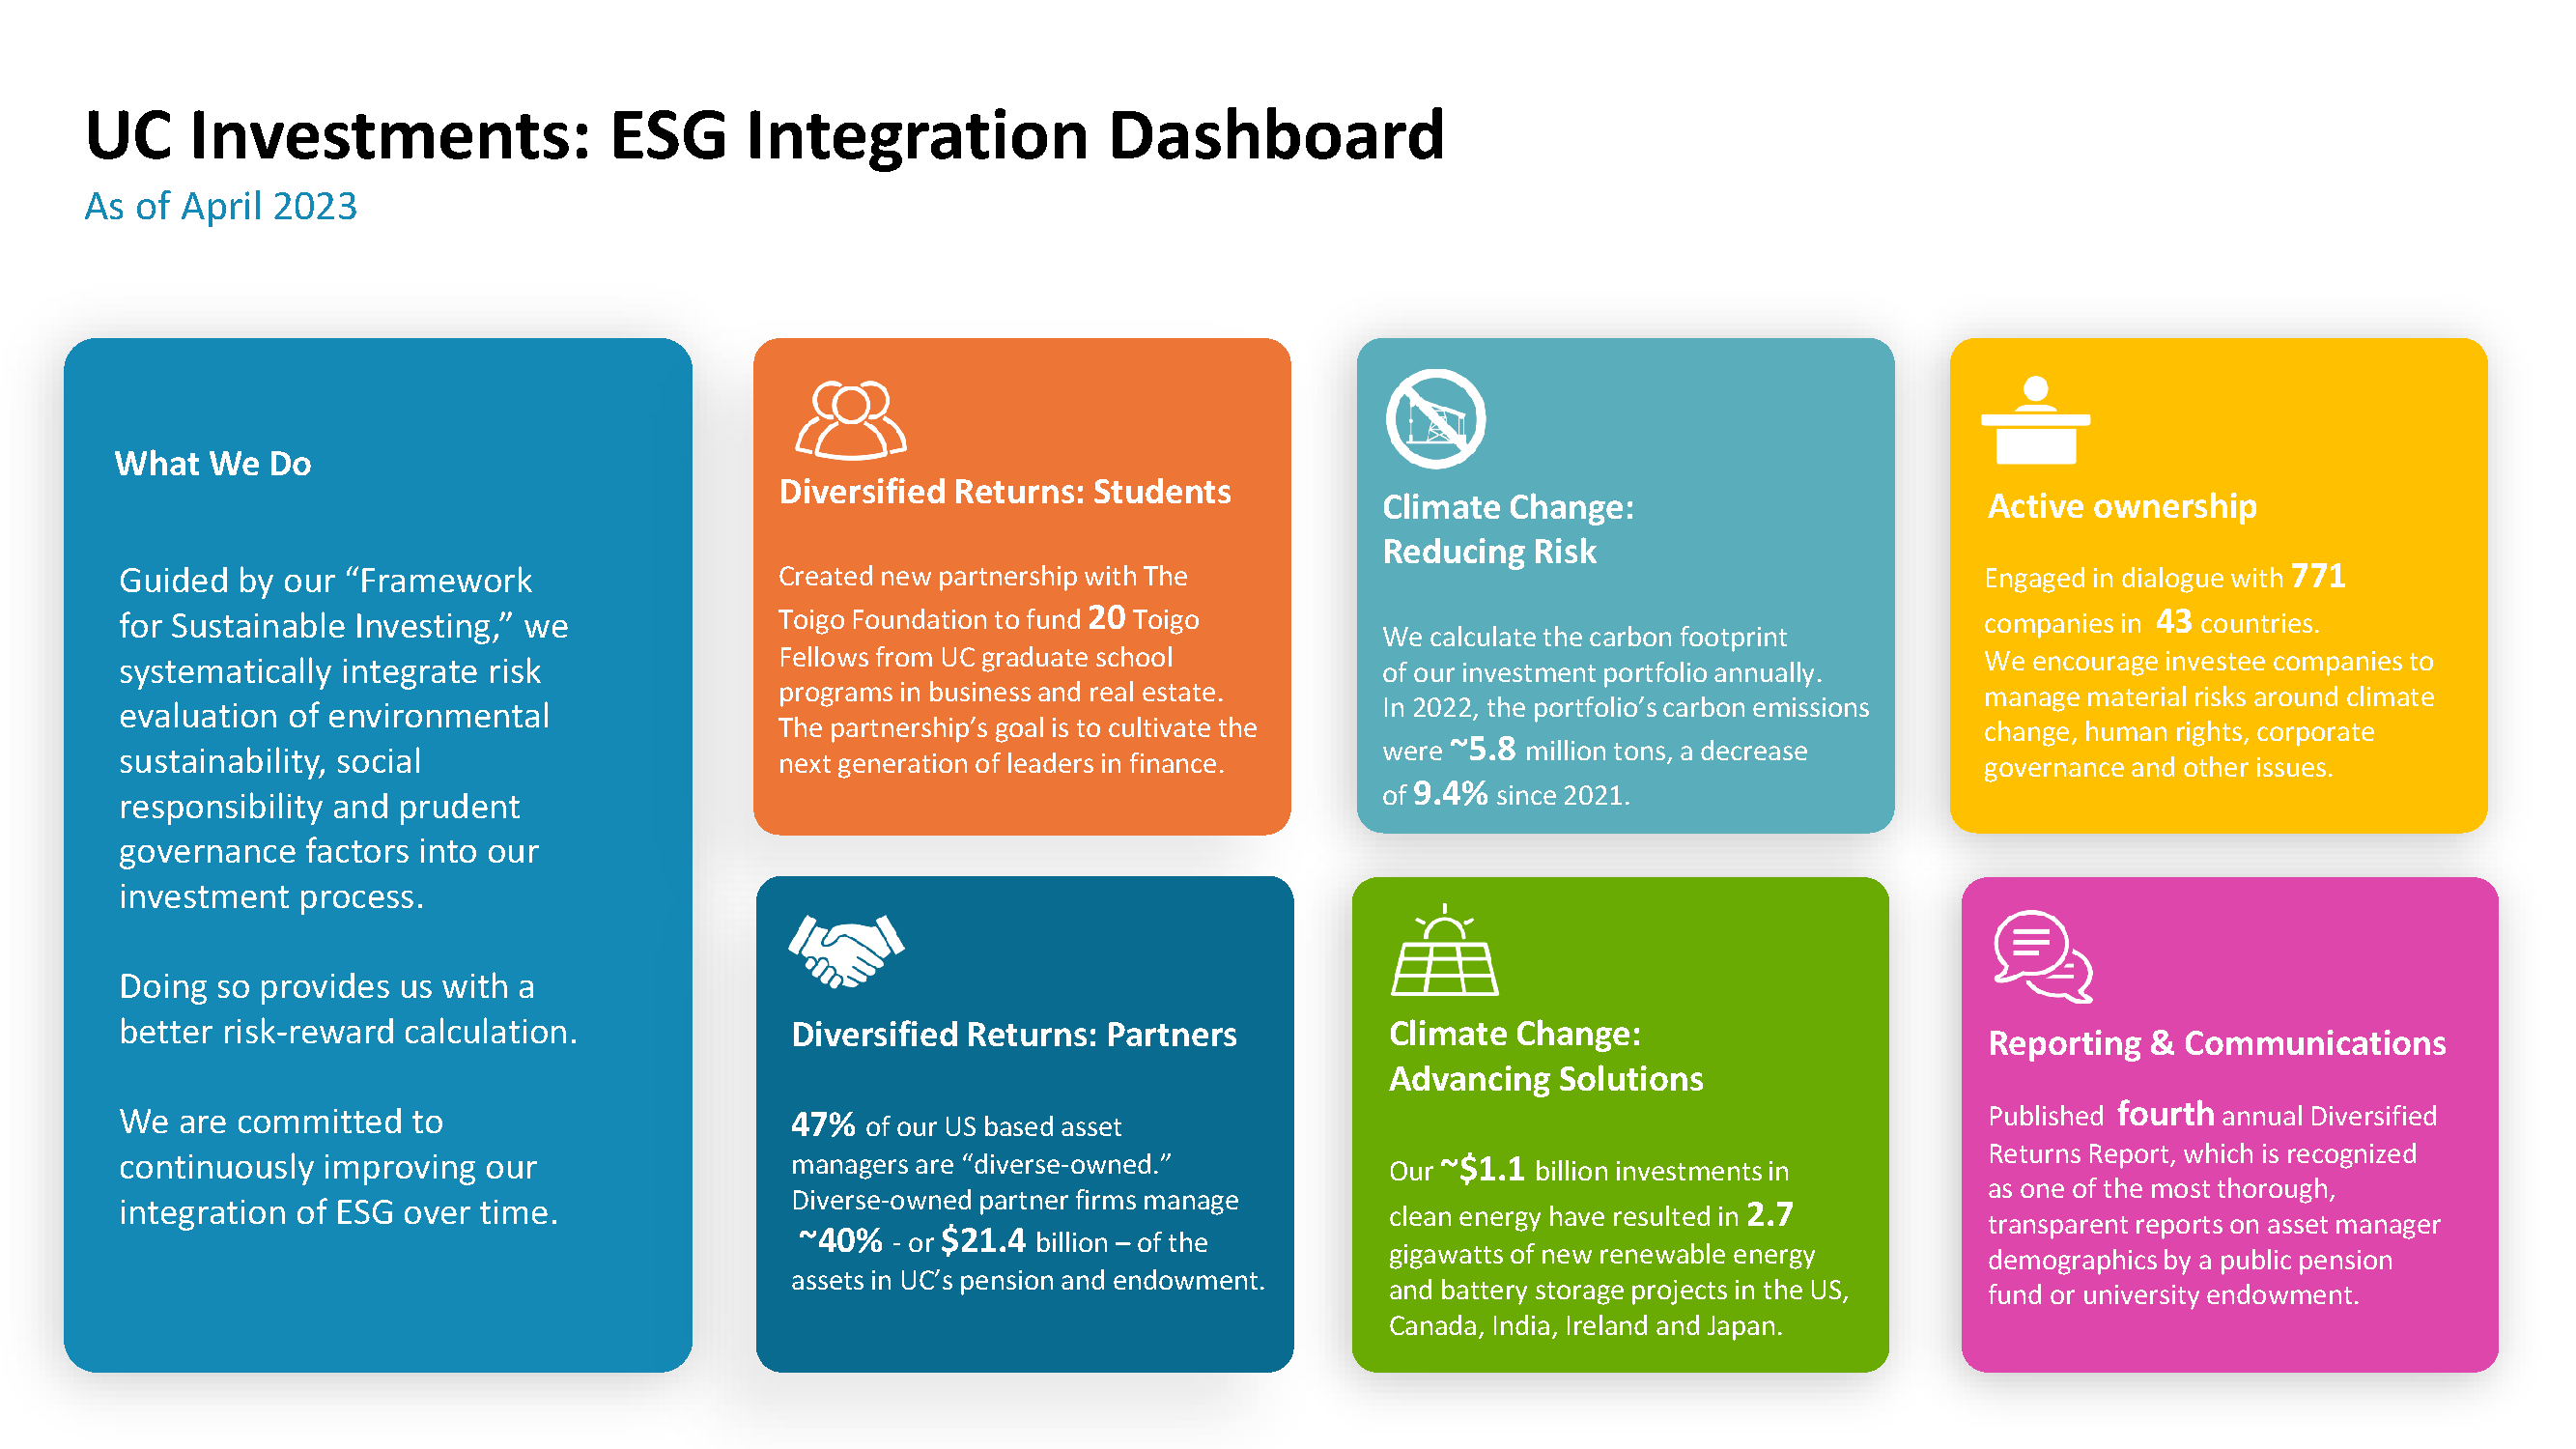 ESG Integration Dashboard: January –March 2021